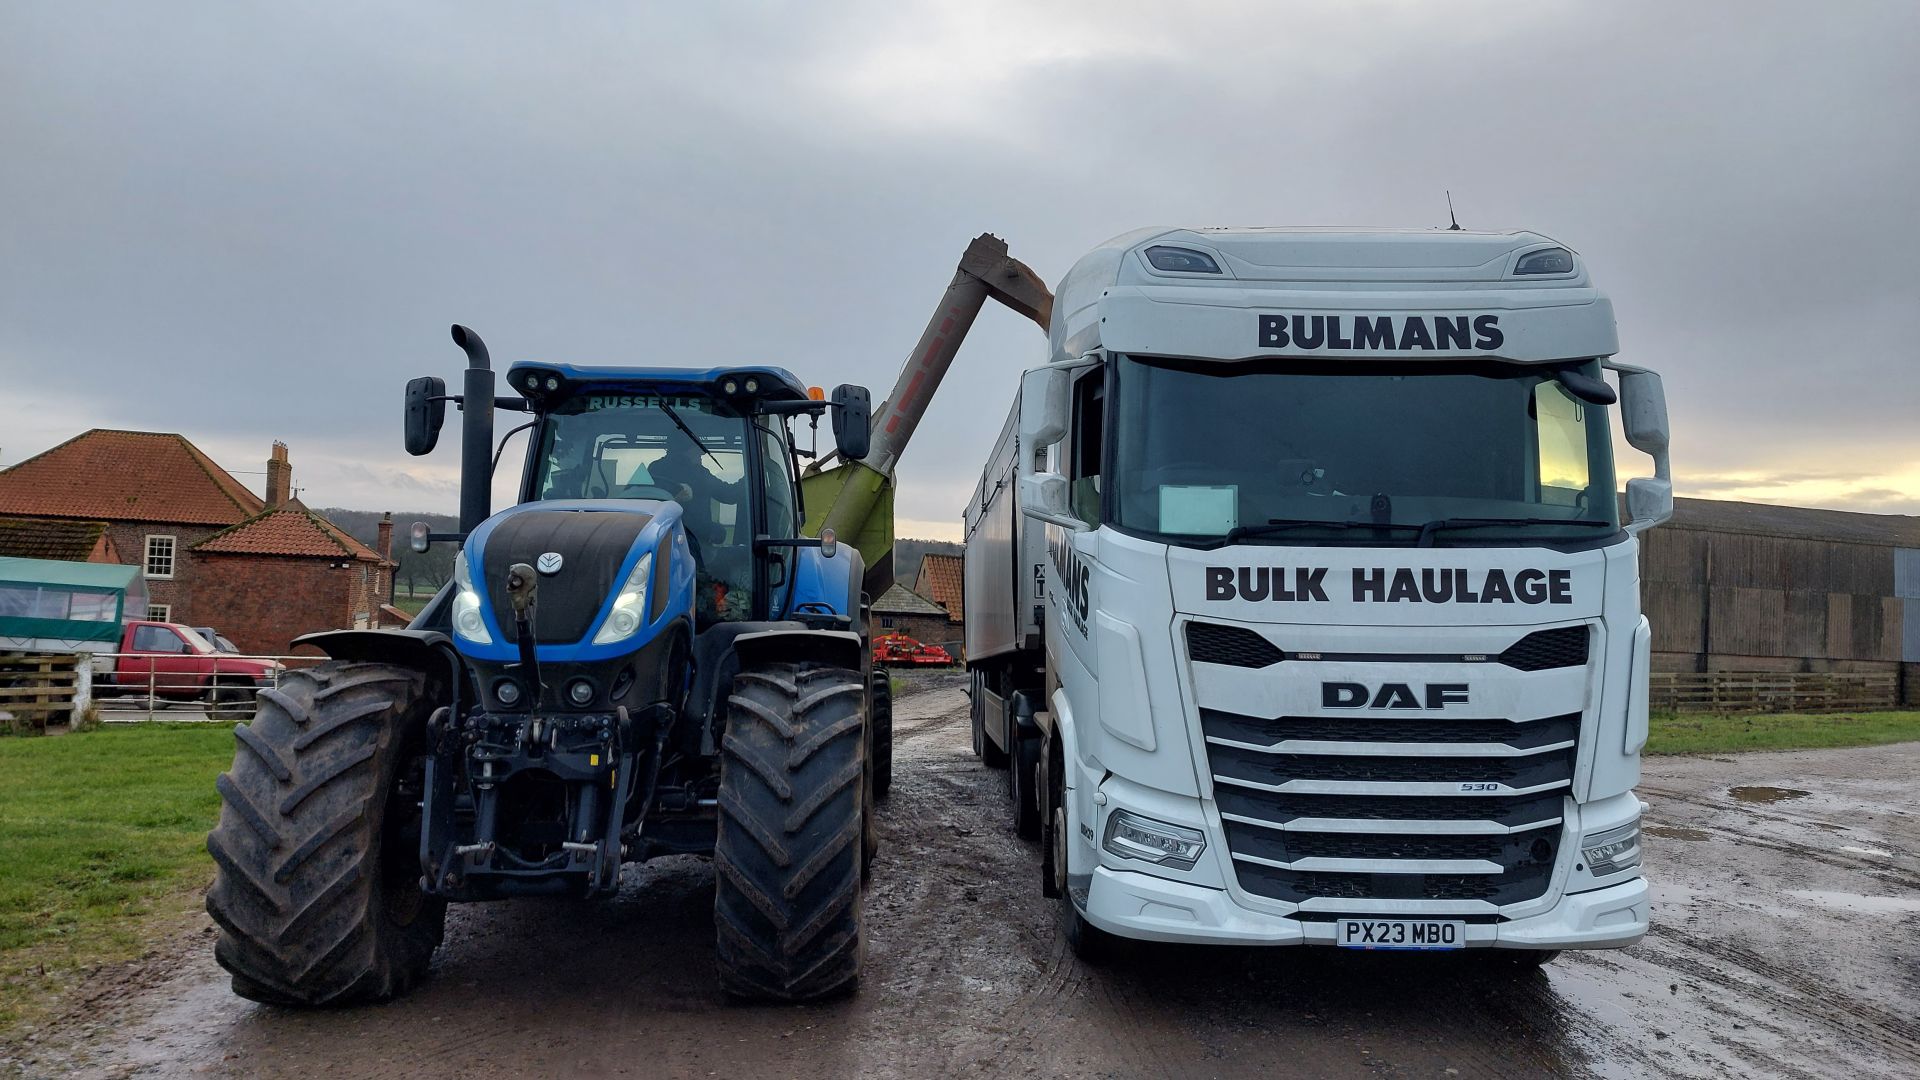 A Bulmans Bulk Haulage DAF truck is being loaded by a blue tractor on a farm.